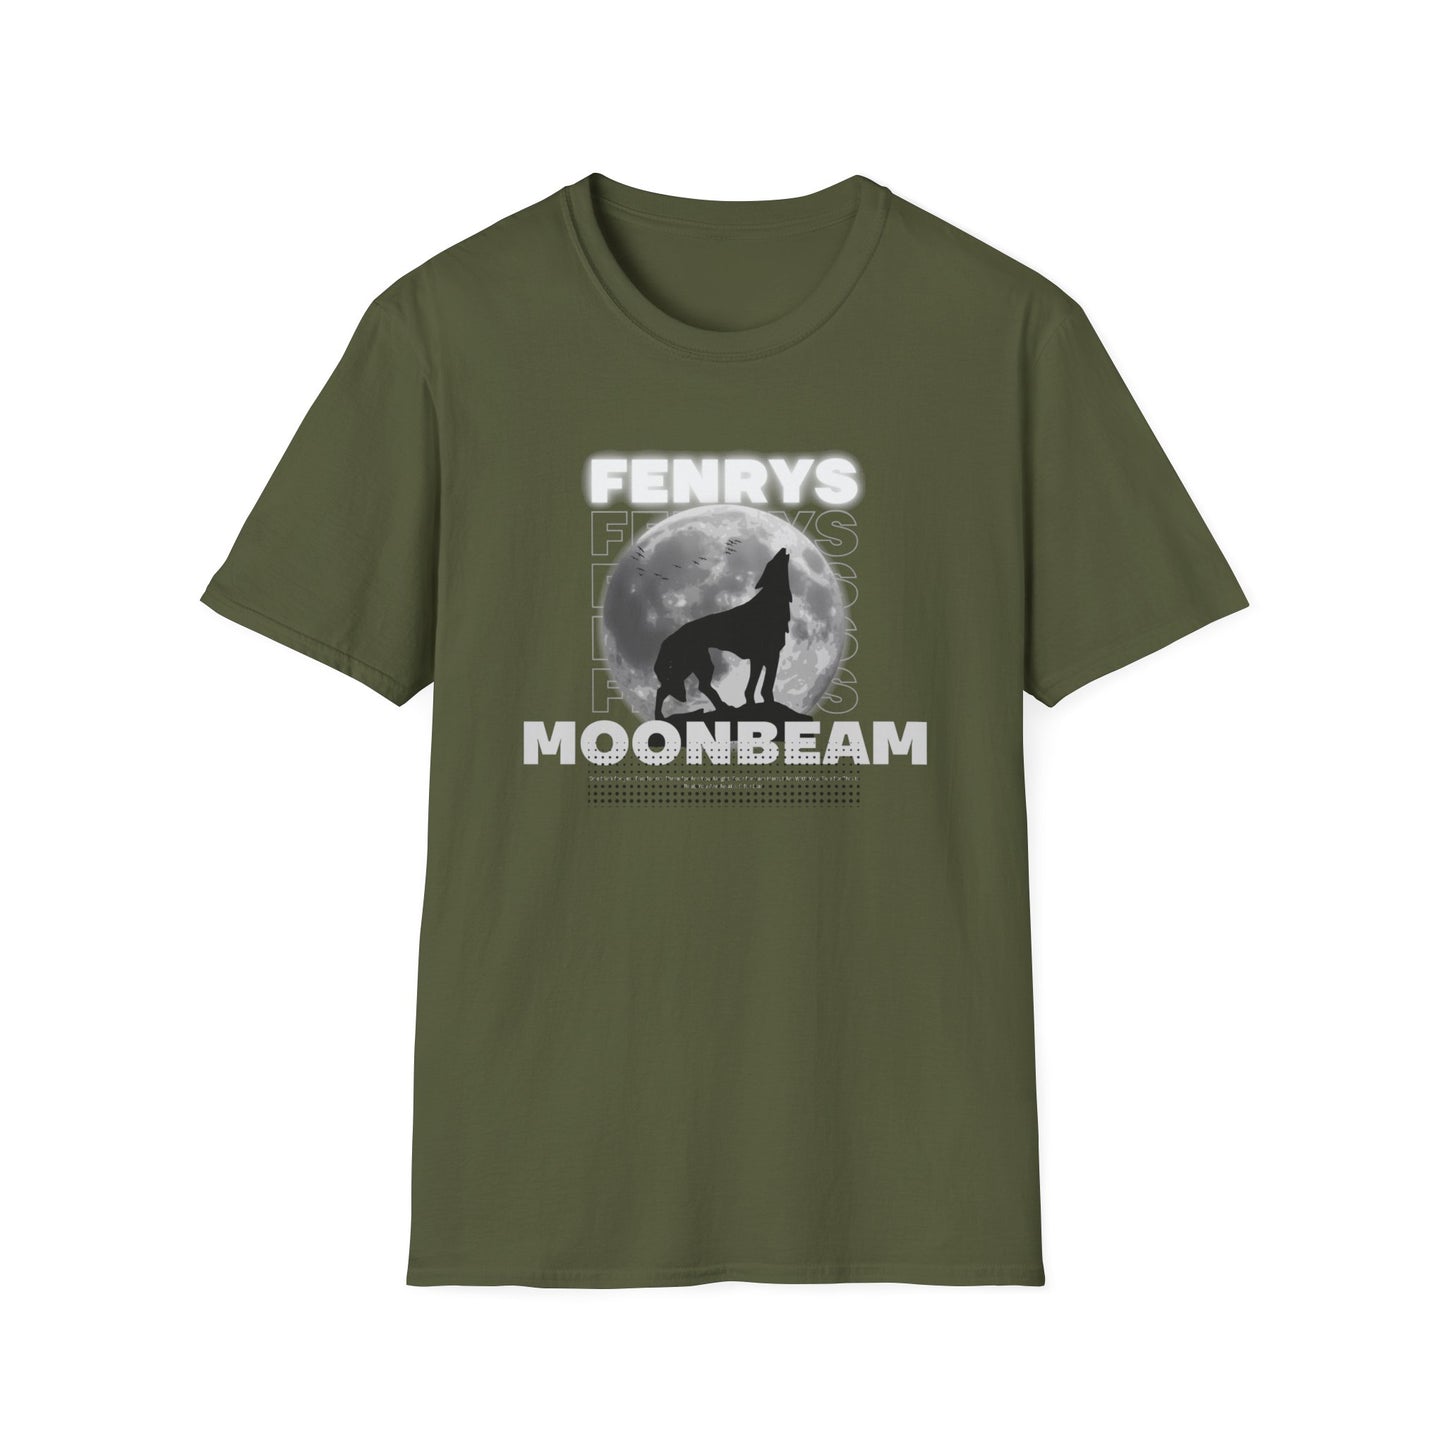 Fenrys Moonbeam T-Shirt, Throne of Glass